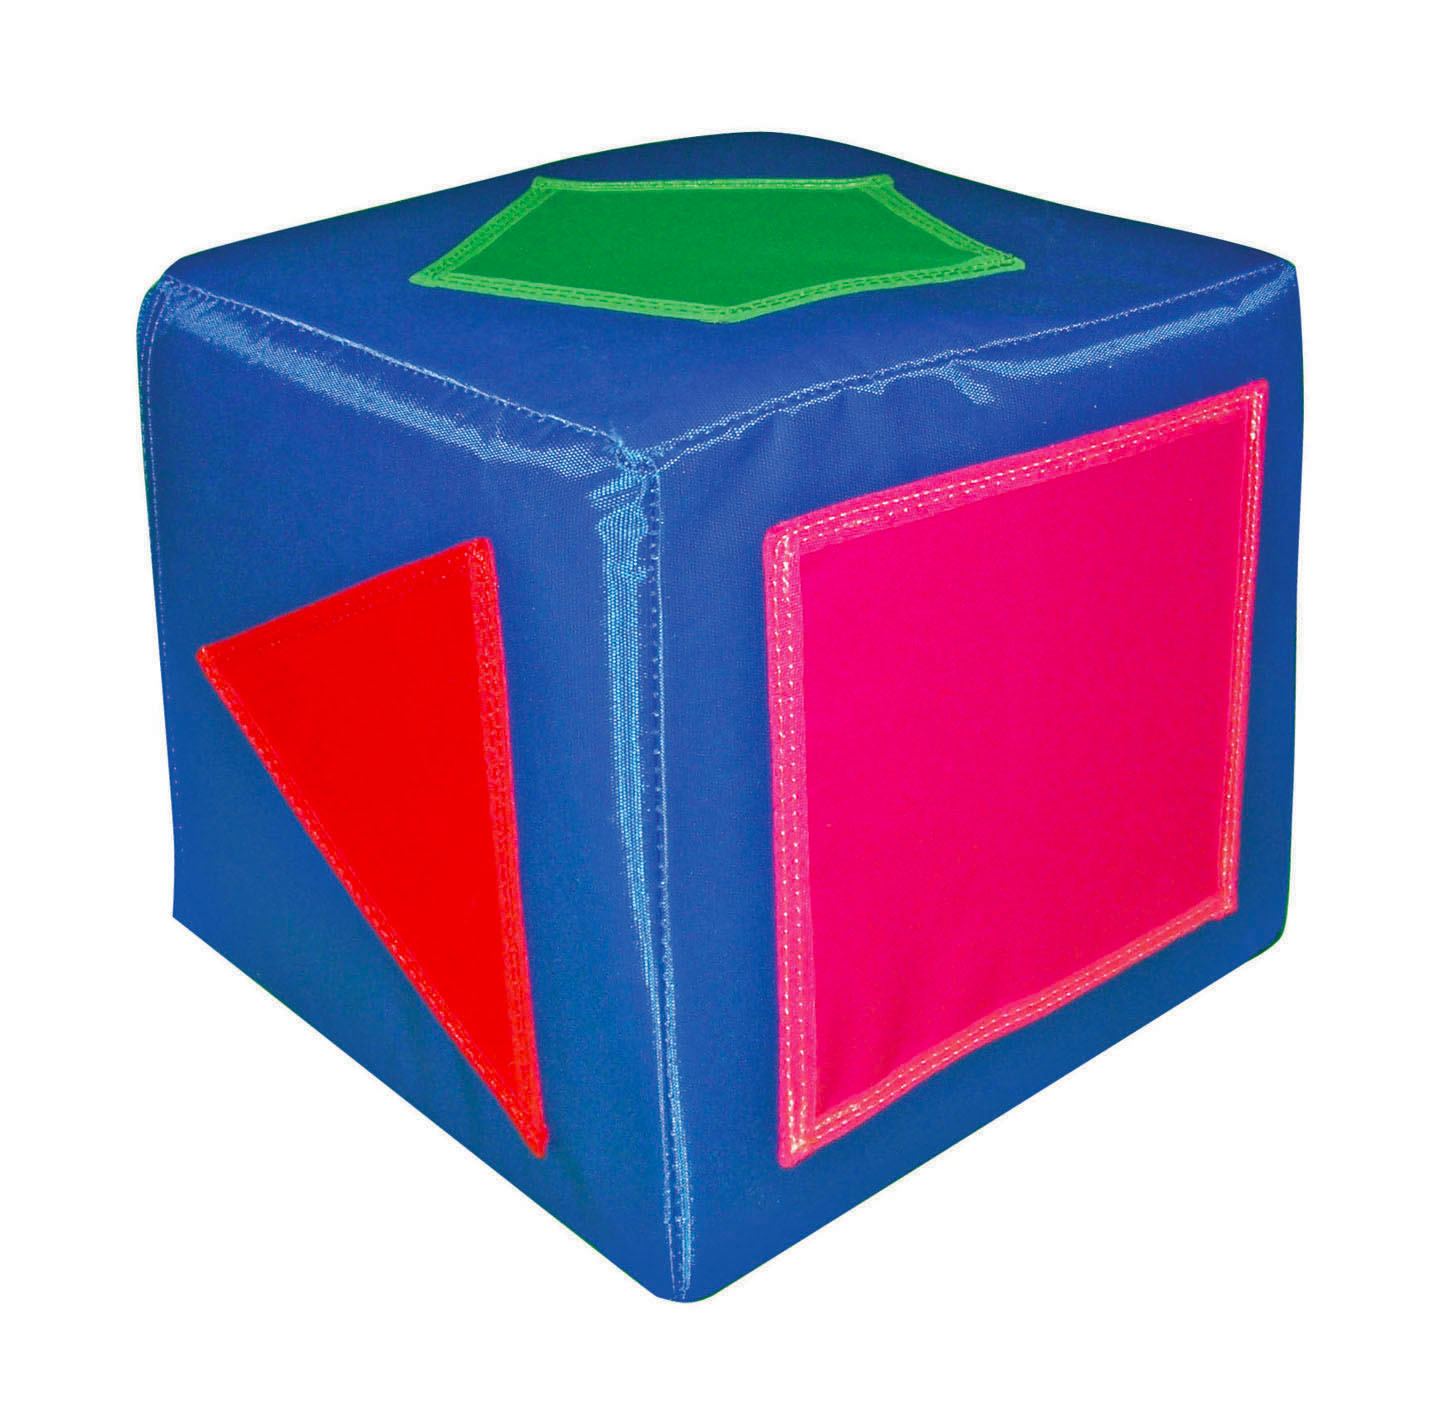 Cubo Figuras Geometricas